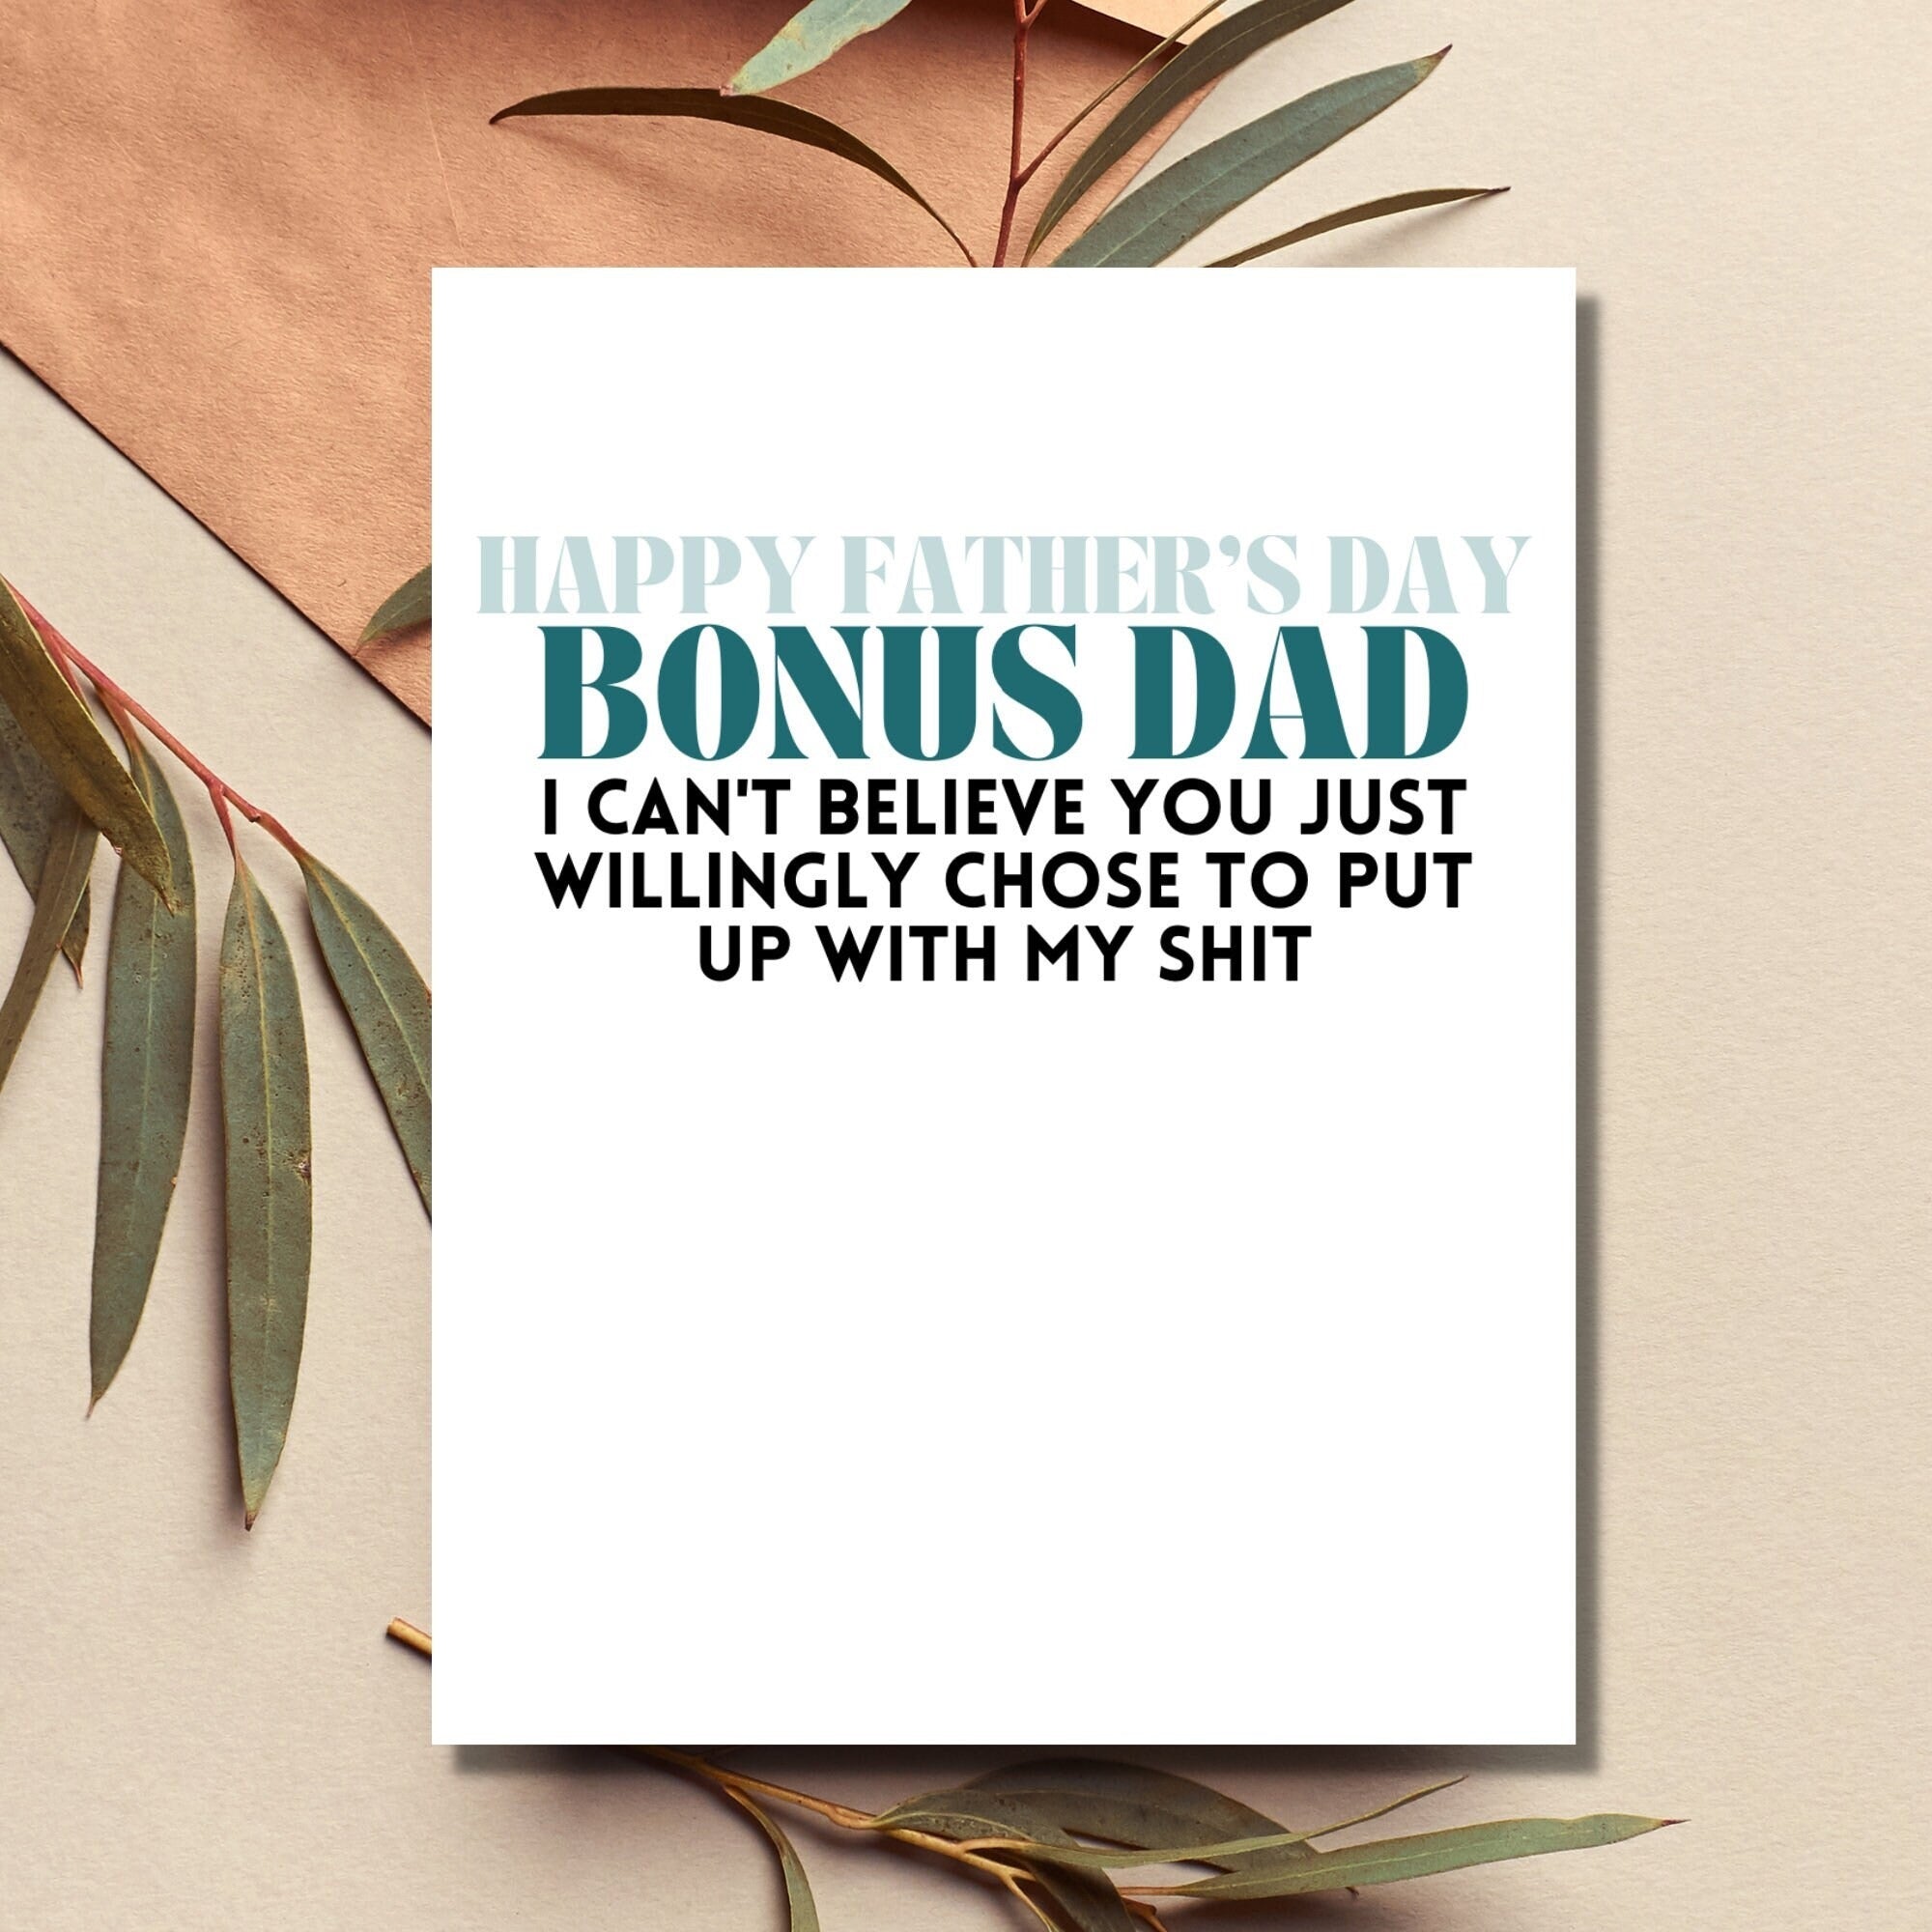 Happy Father's Day Bonus Dad Card